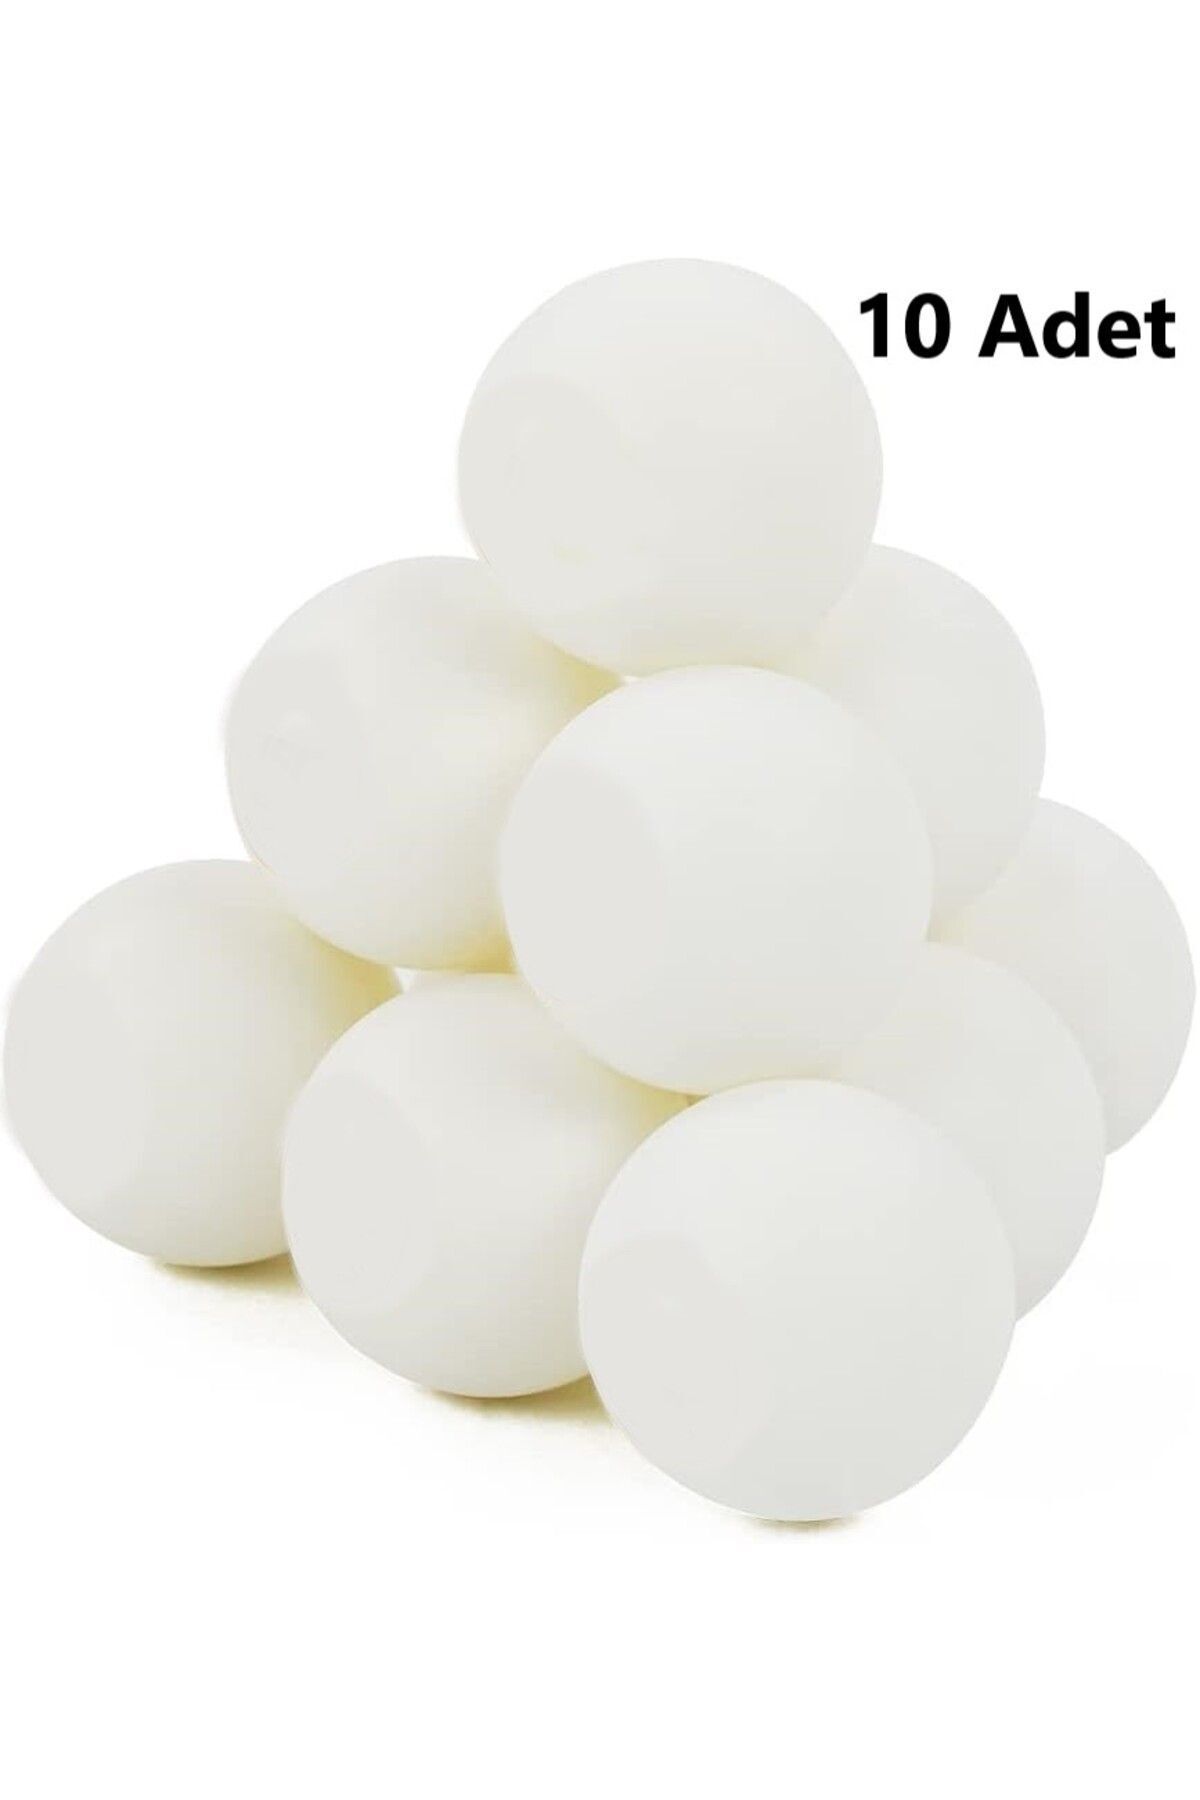 GÜZELYÜZ AVM Pinpon Topu Beyaz 10 Adet Masa Tenisi Topu